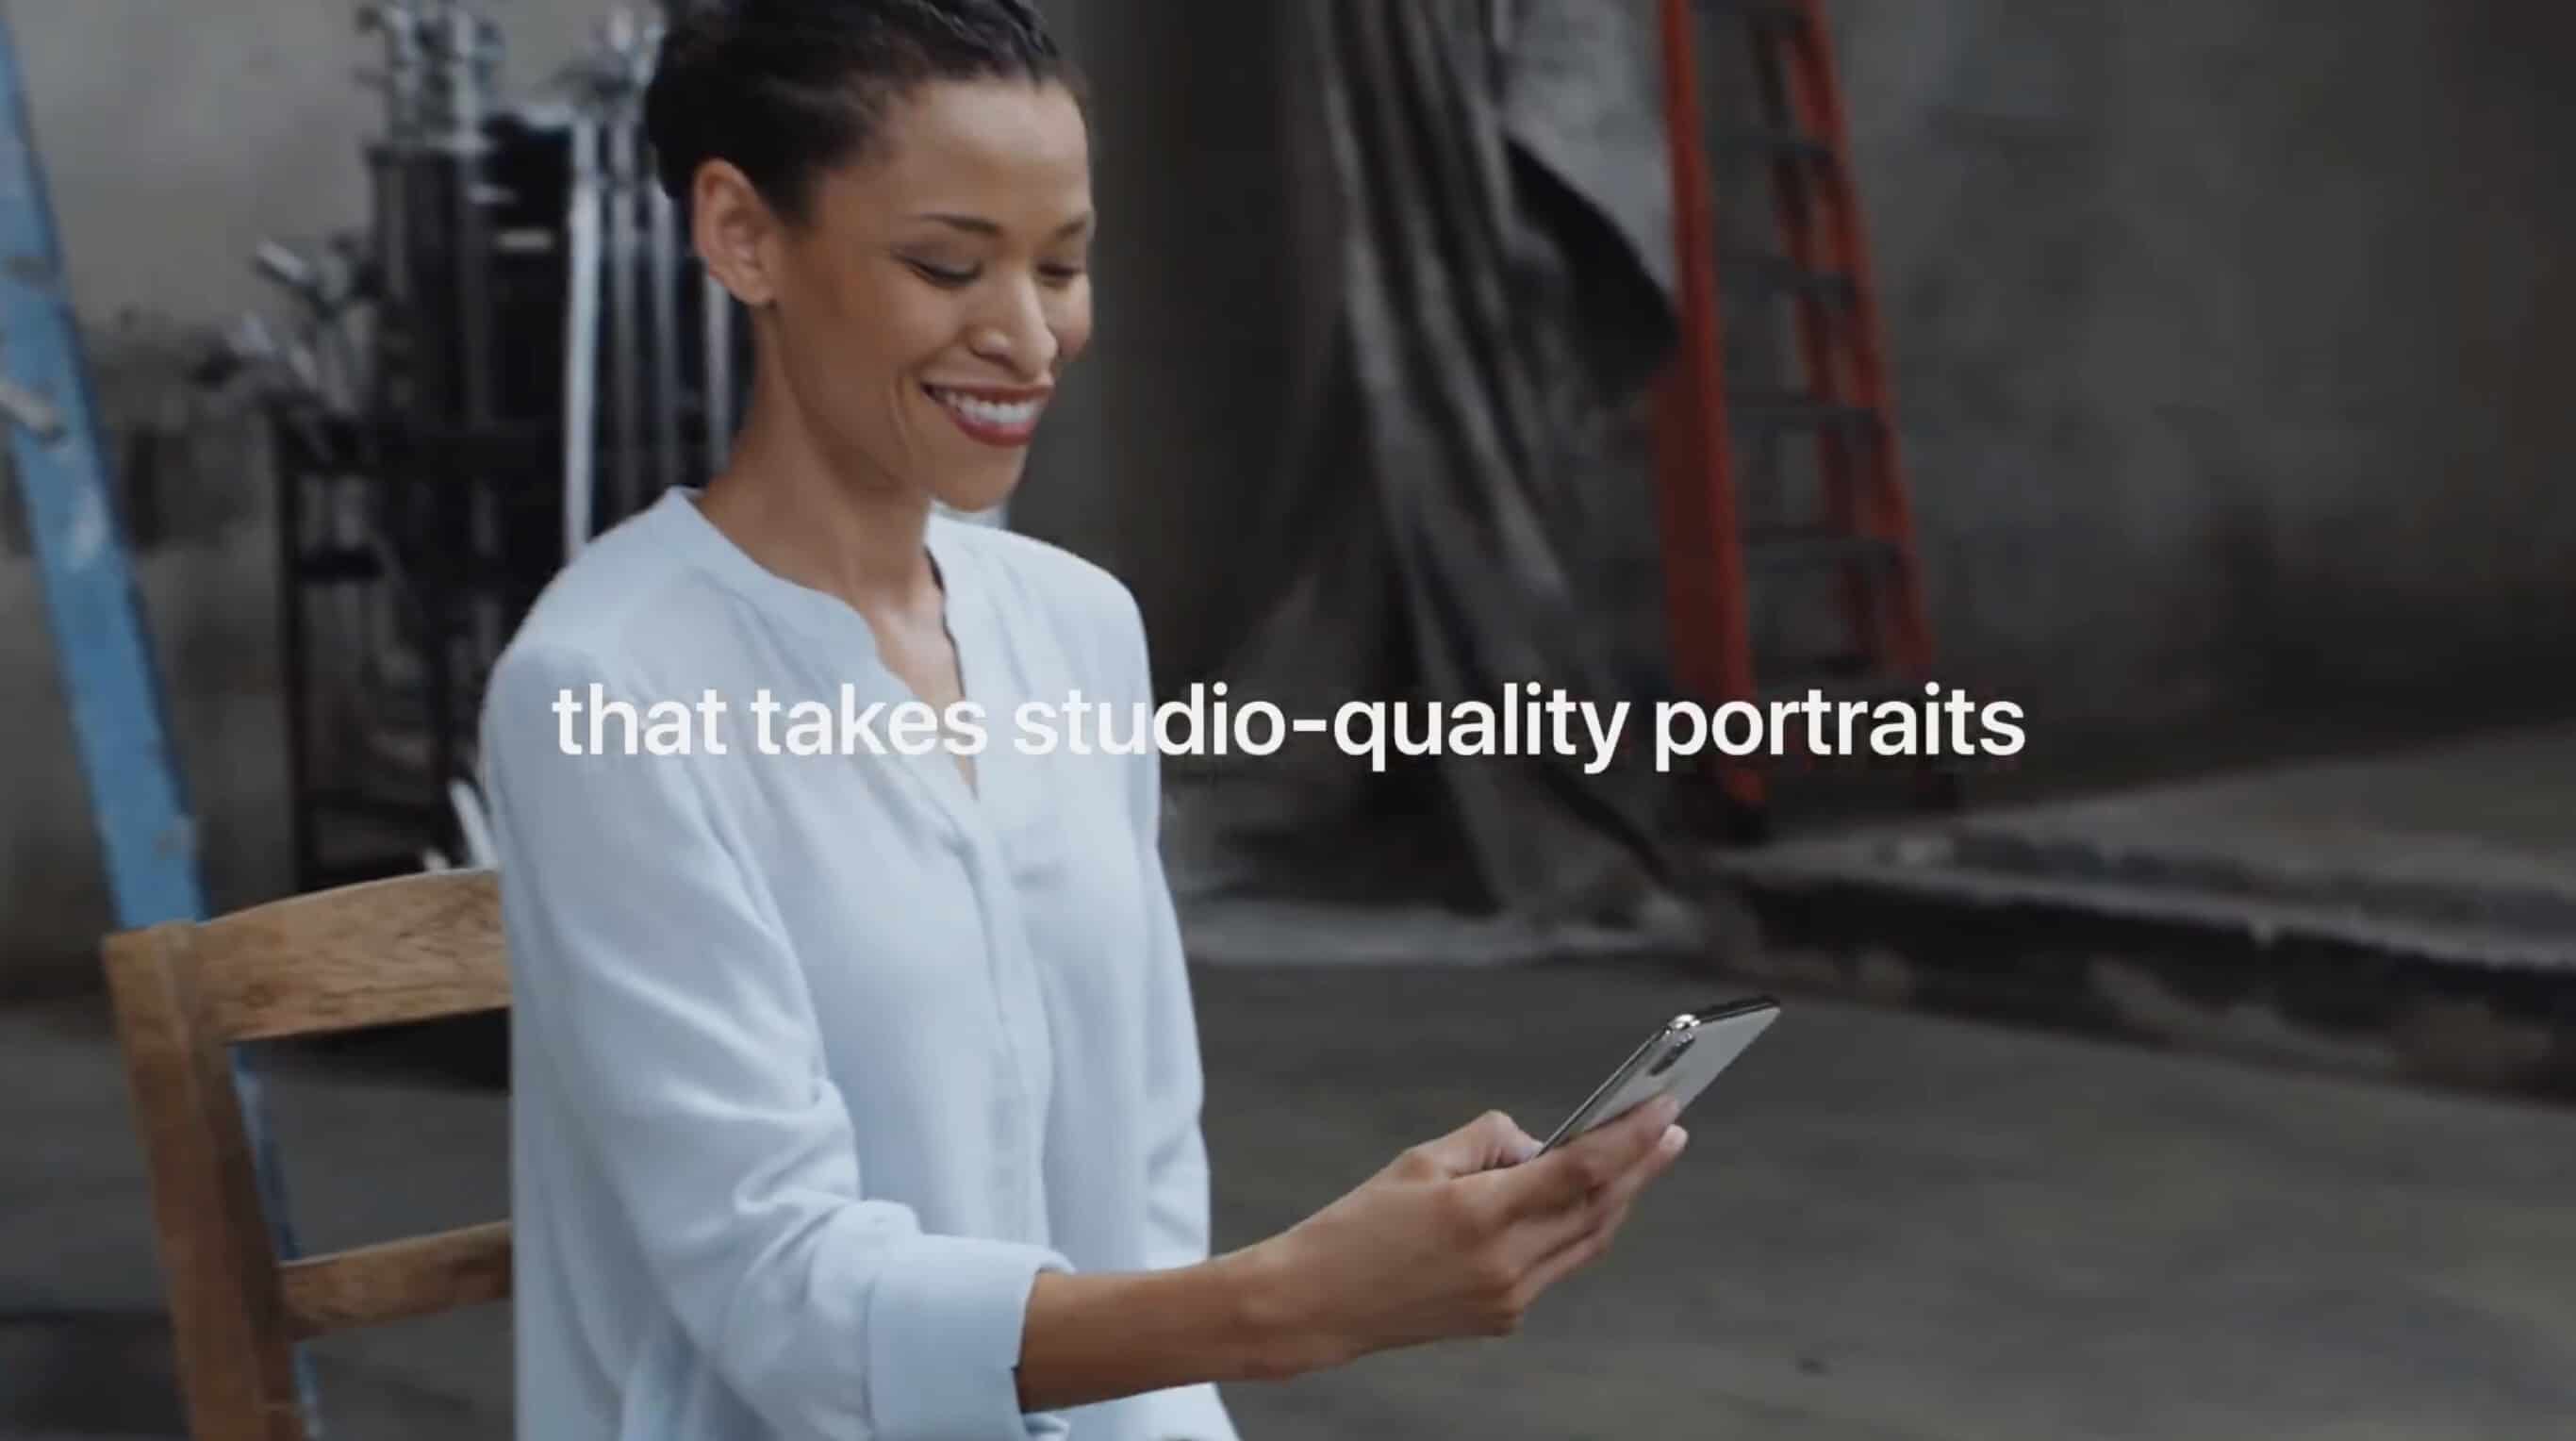 Apple ad says iPhone X takes studio-quality portraits.